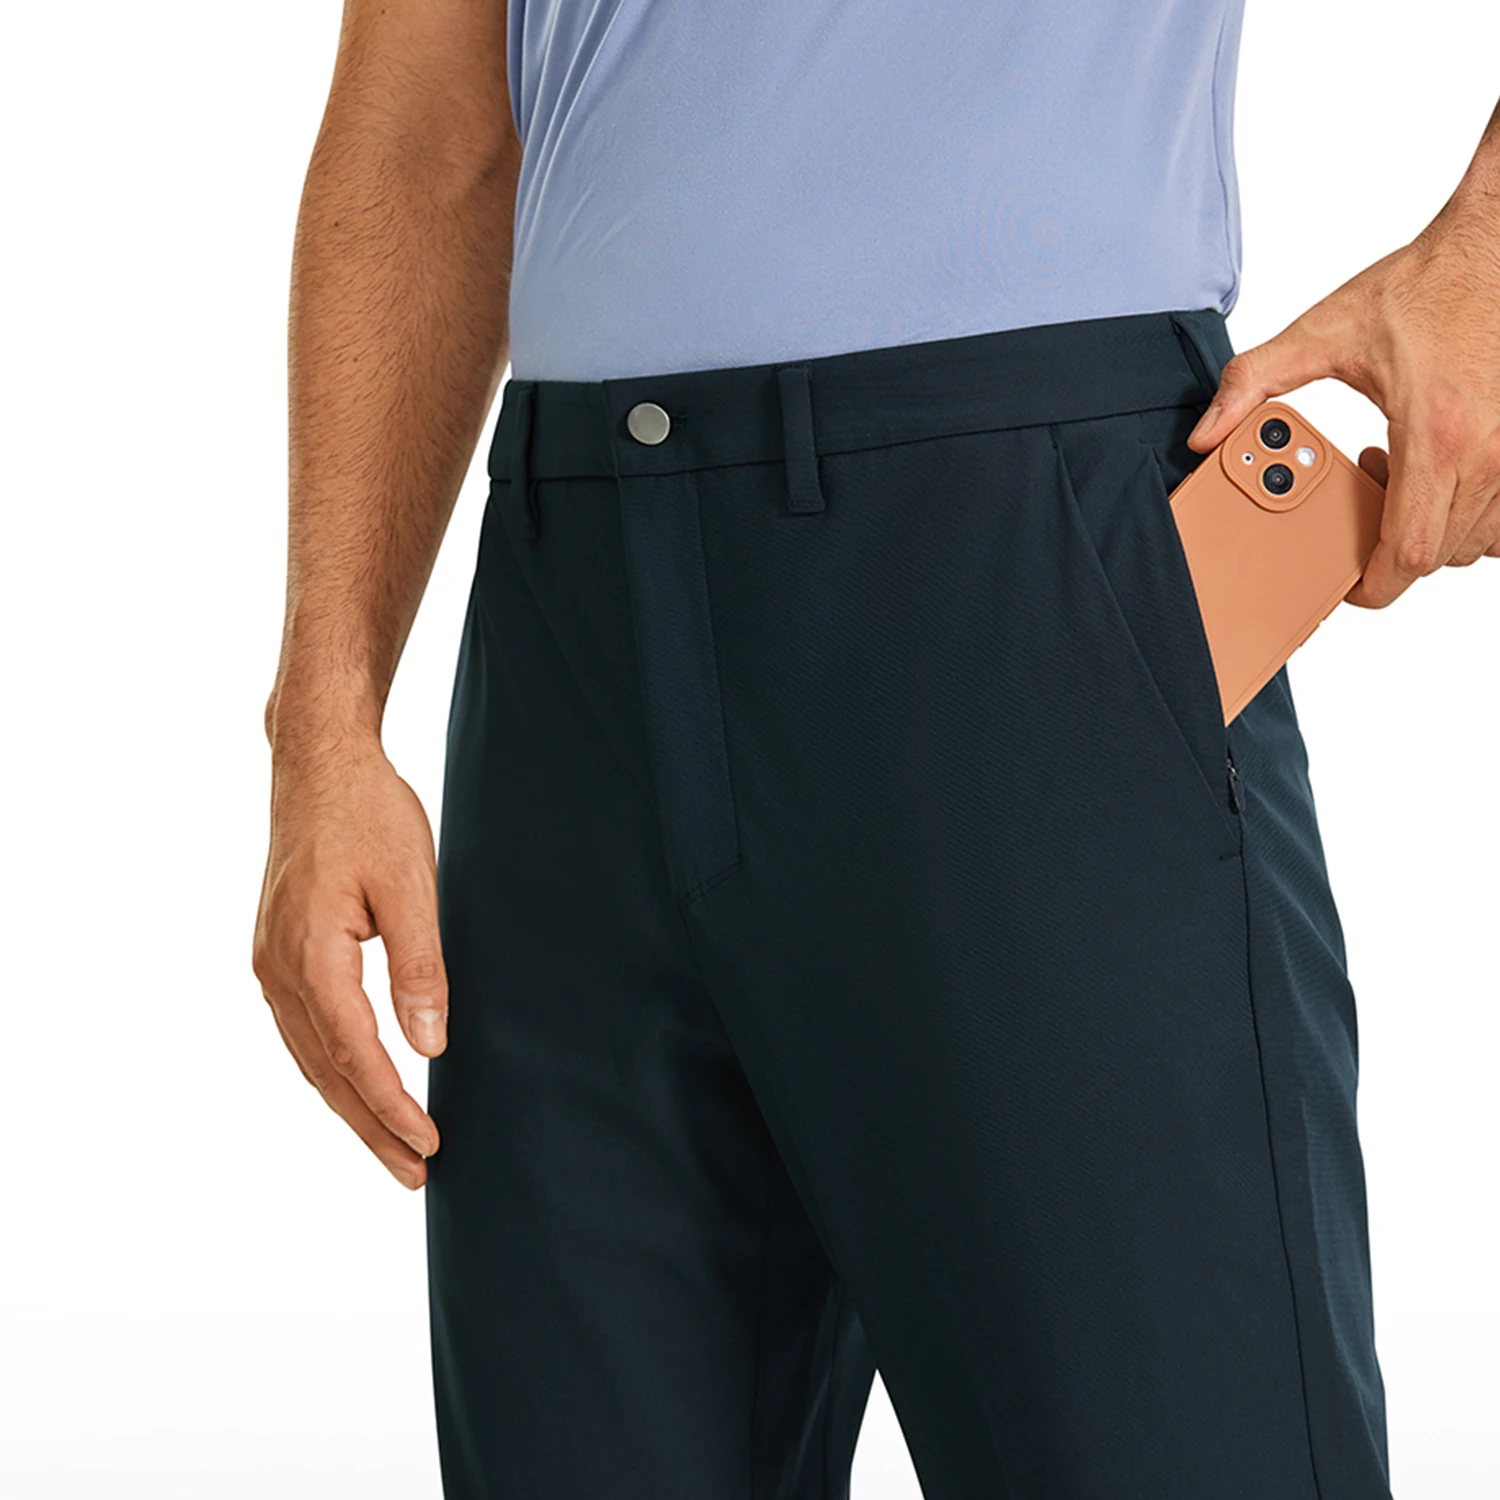 CRZ YOGA Men's All Day Comfy Golf Pants - 34